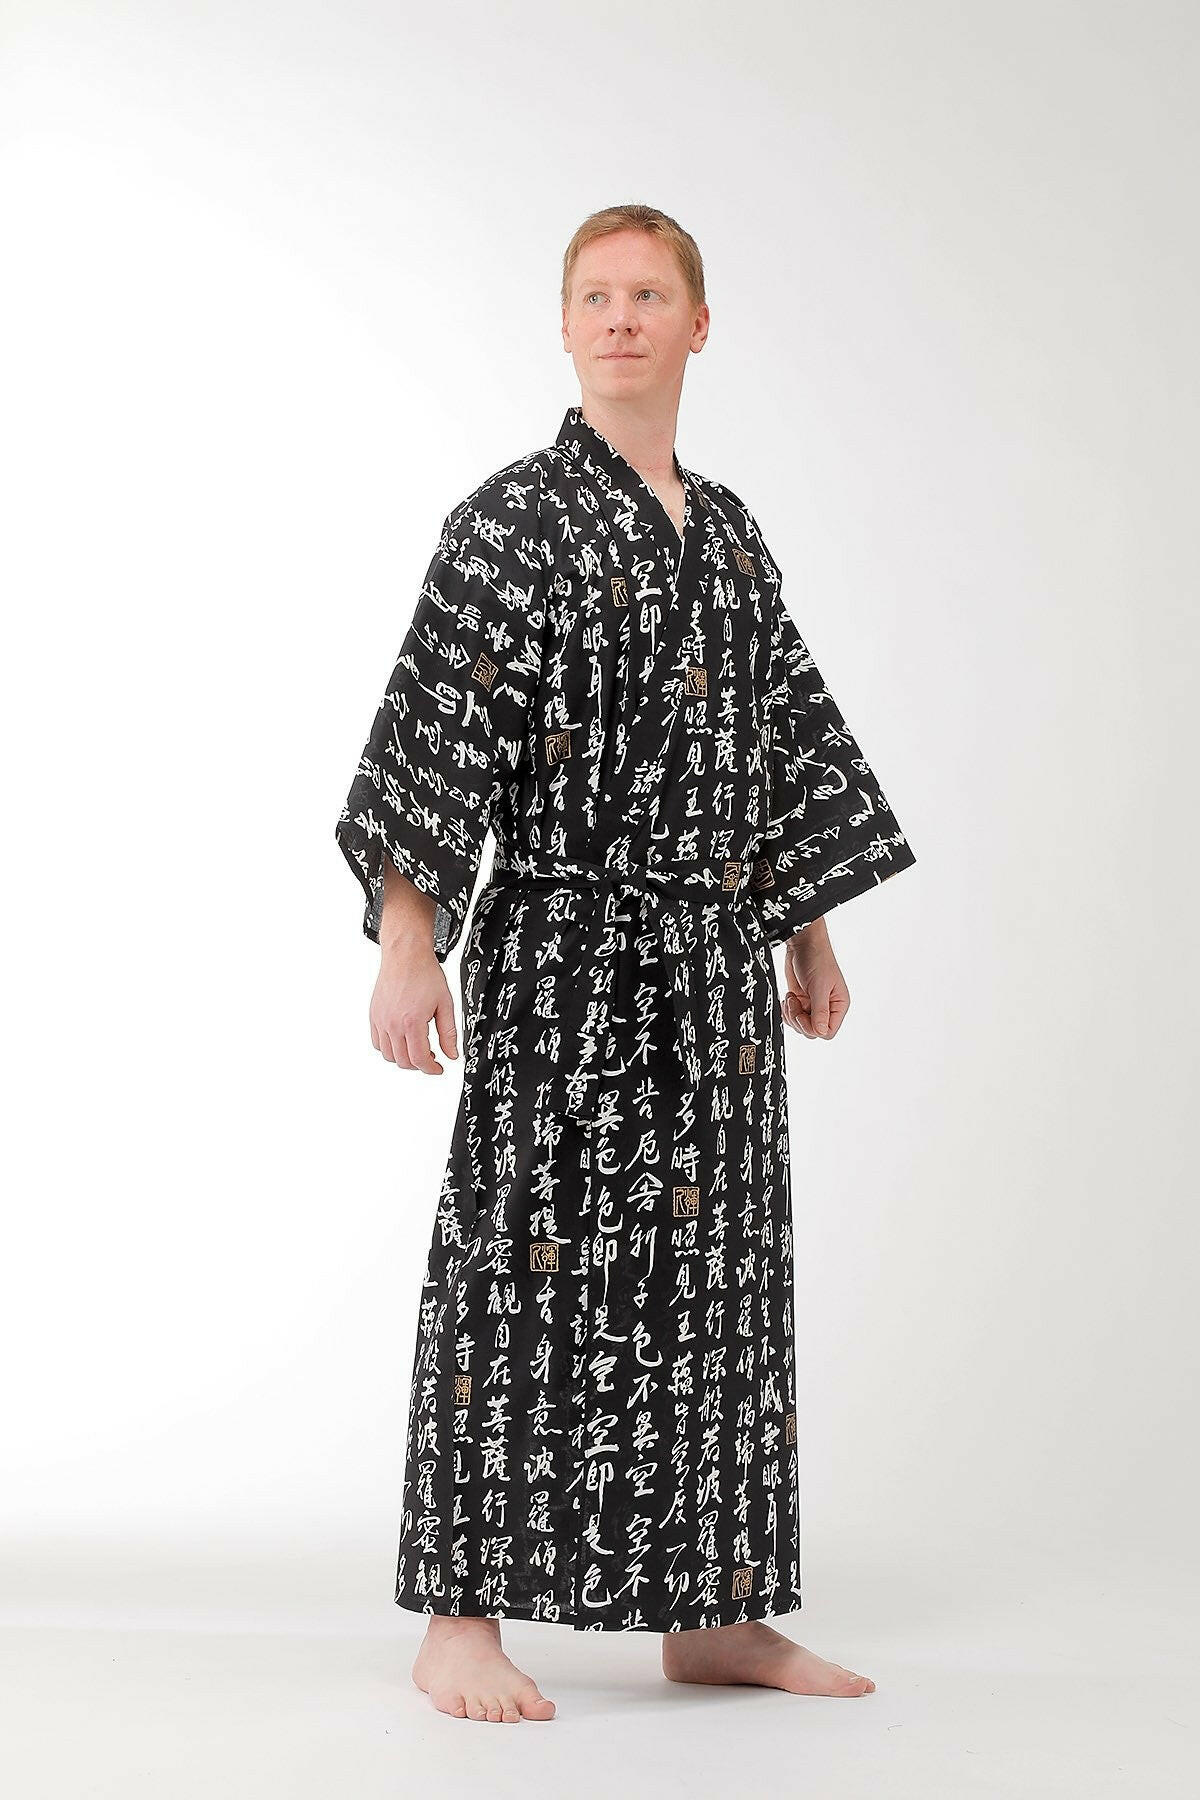 Men HANNYA Sutra Cotton Yukata Kimono Color Black Model Front View